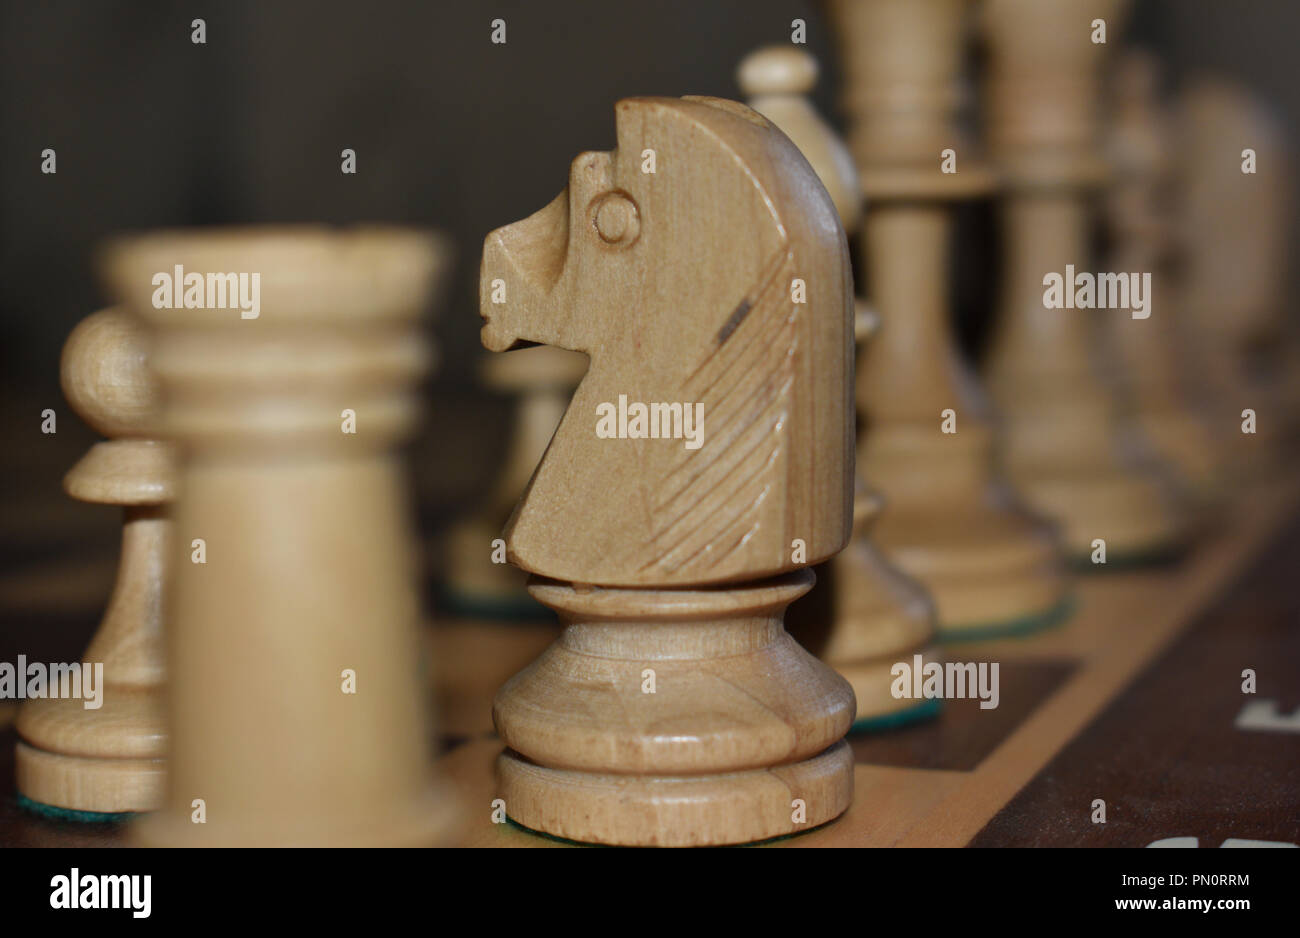 Chess Opening: Benoni Defense, Modern Variation Stock Photo - Alamy